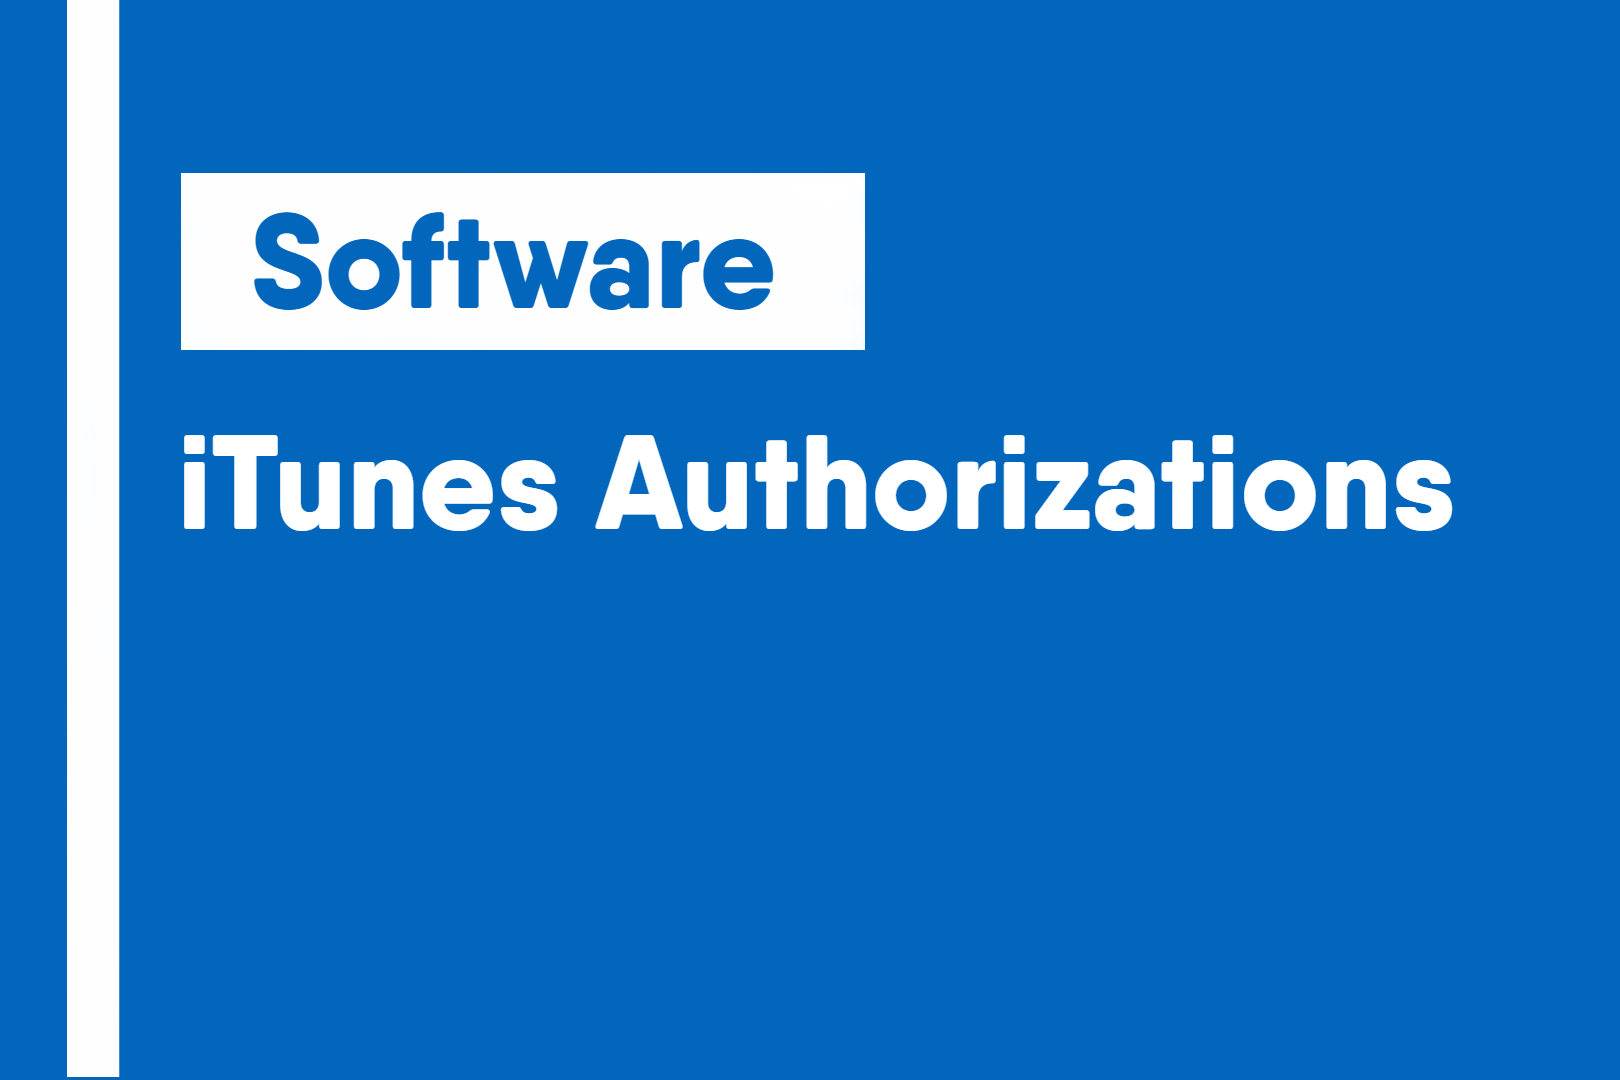 iTunes Authorizations